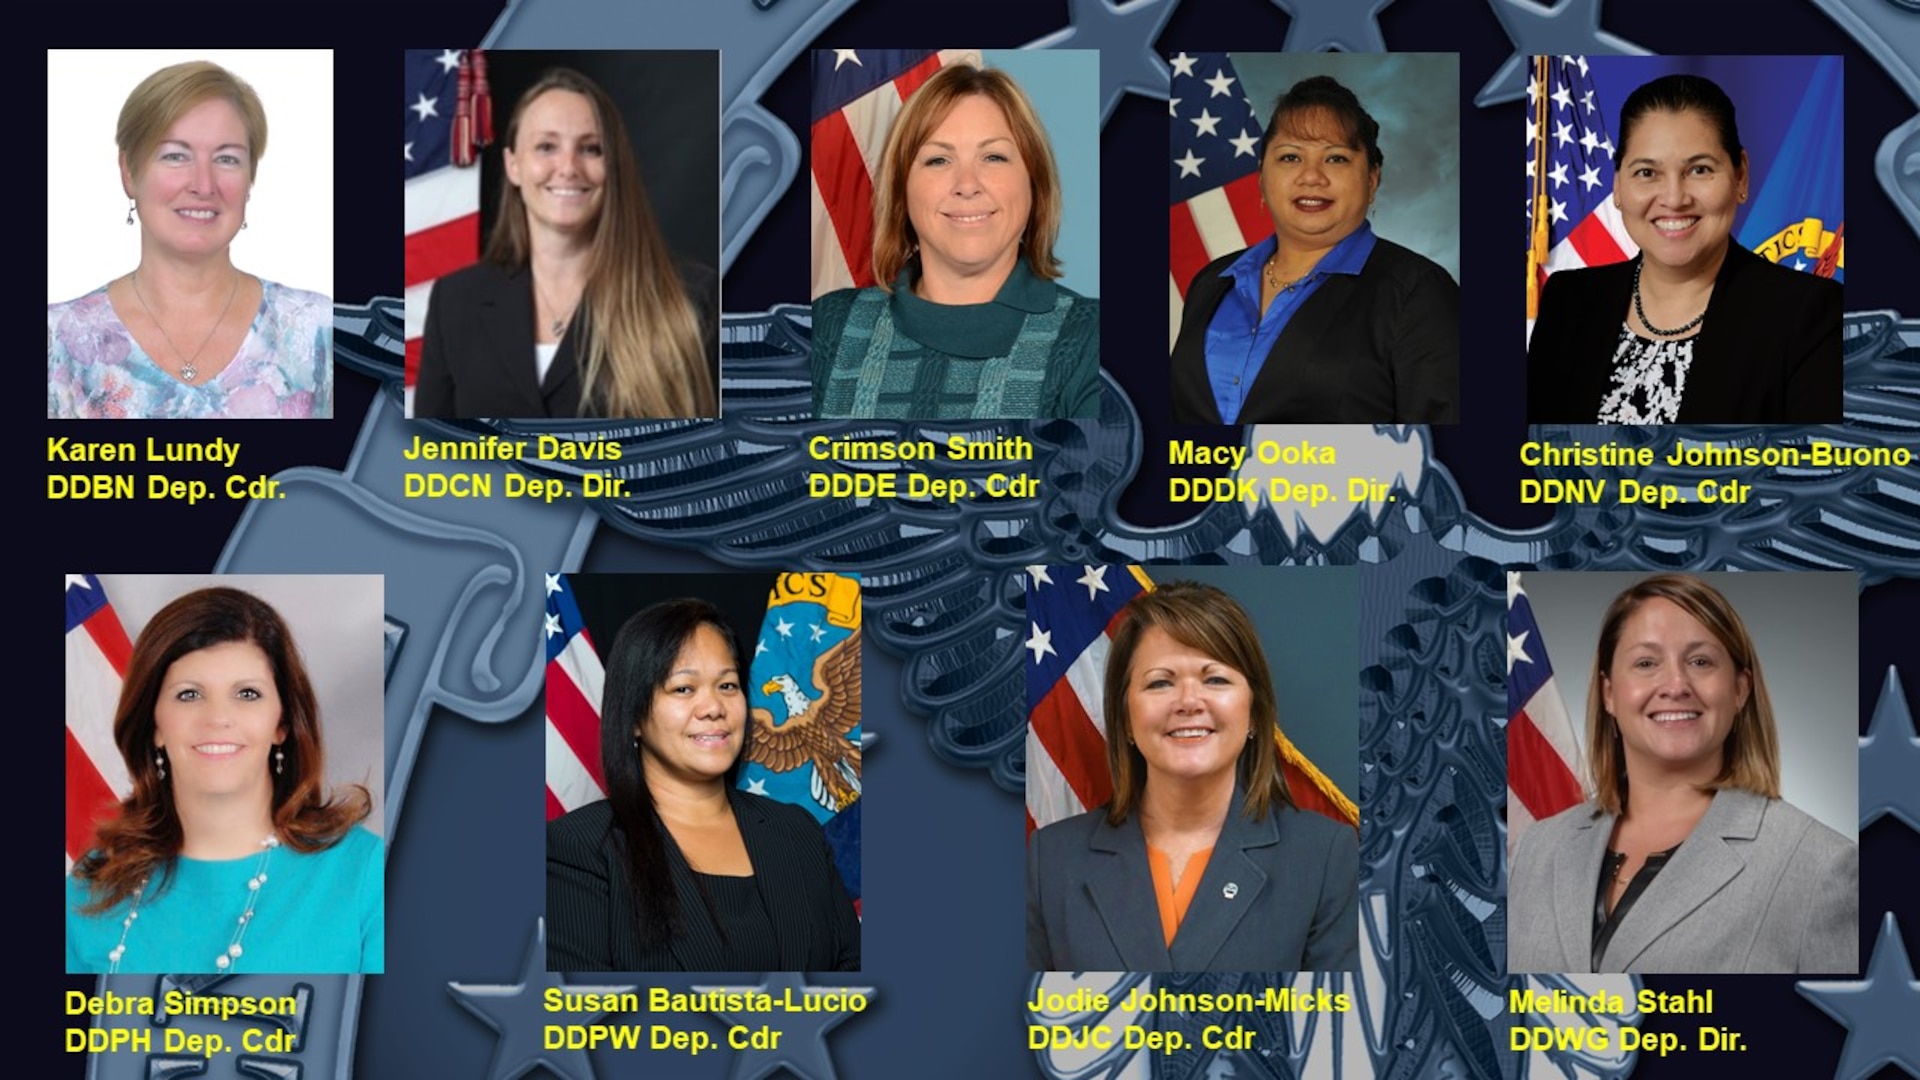 DLA Distribution highlights distribution center deputy commanders/directors for Women’s History Month 2021